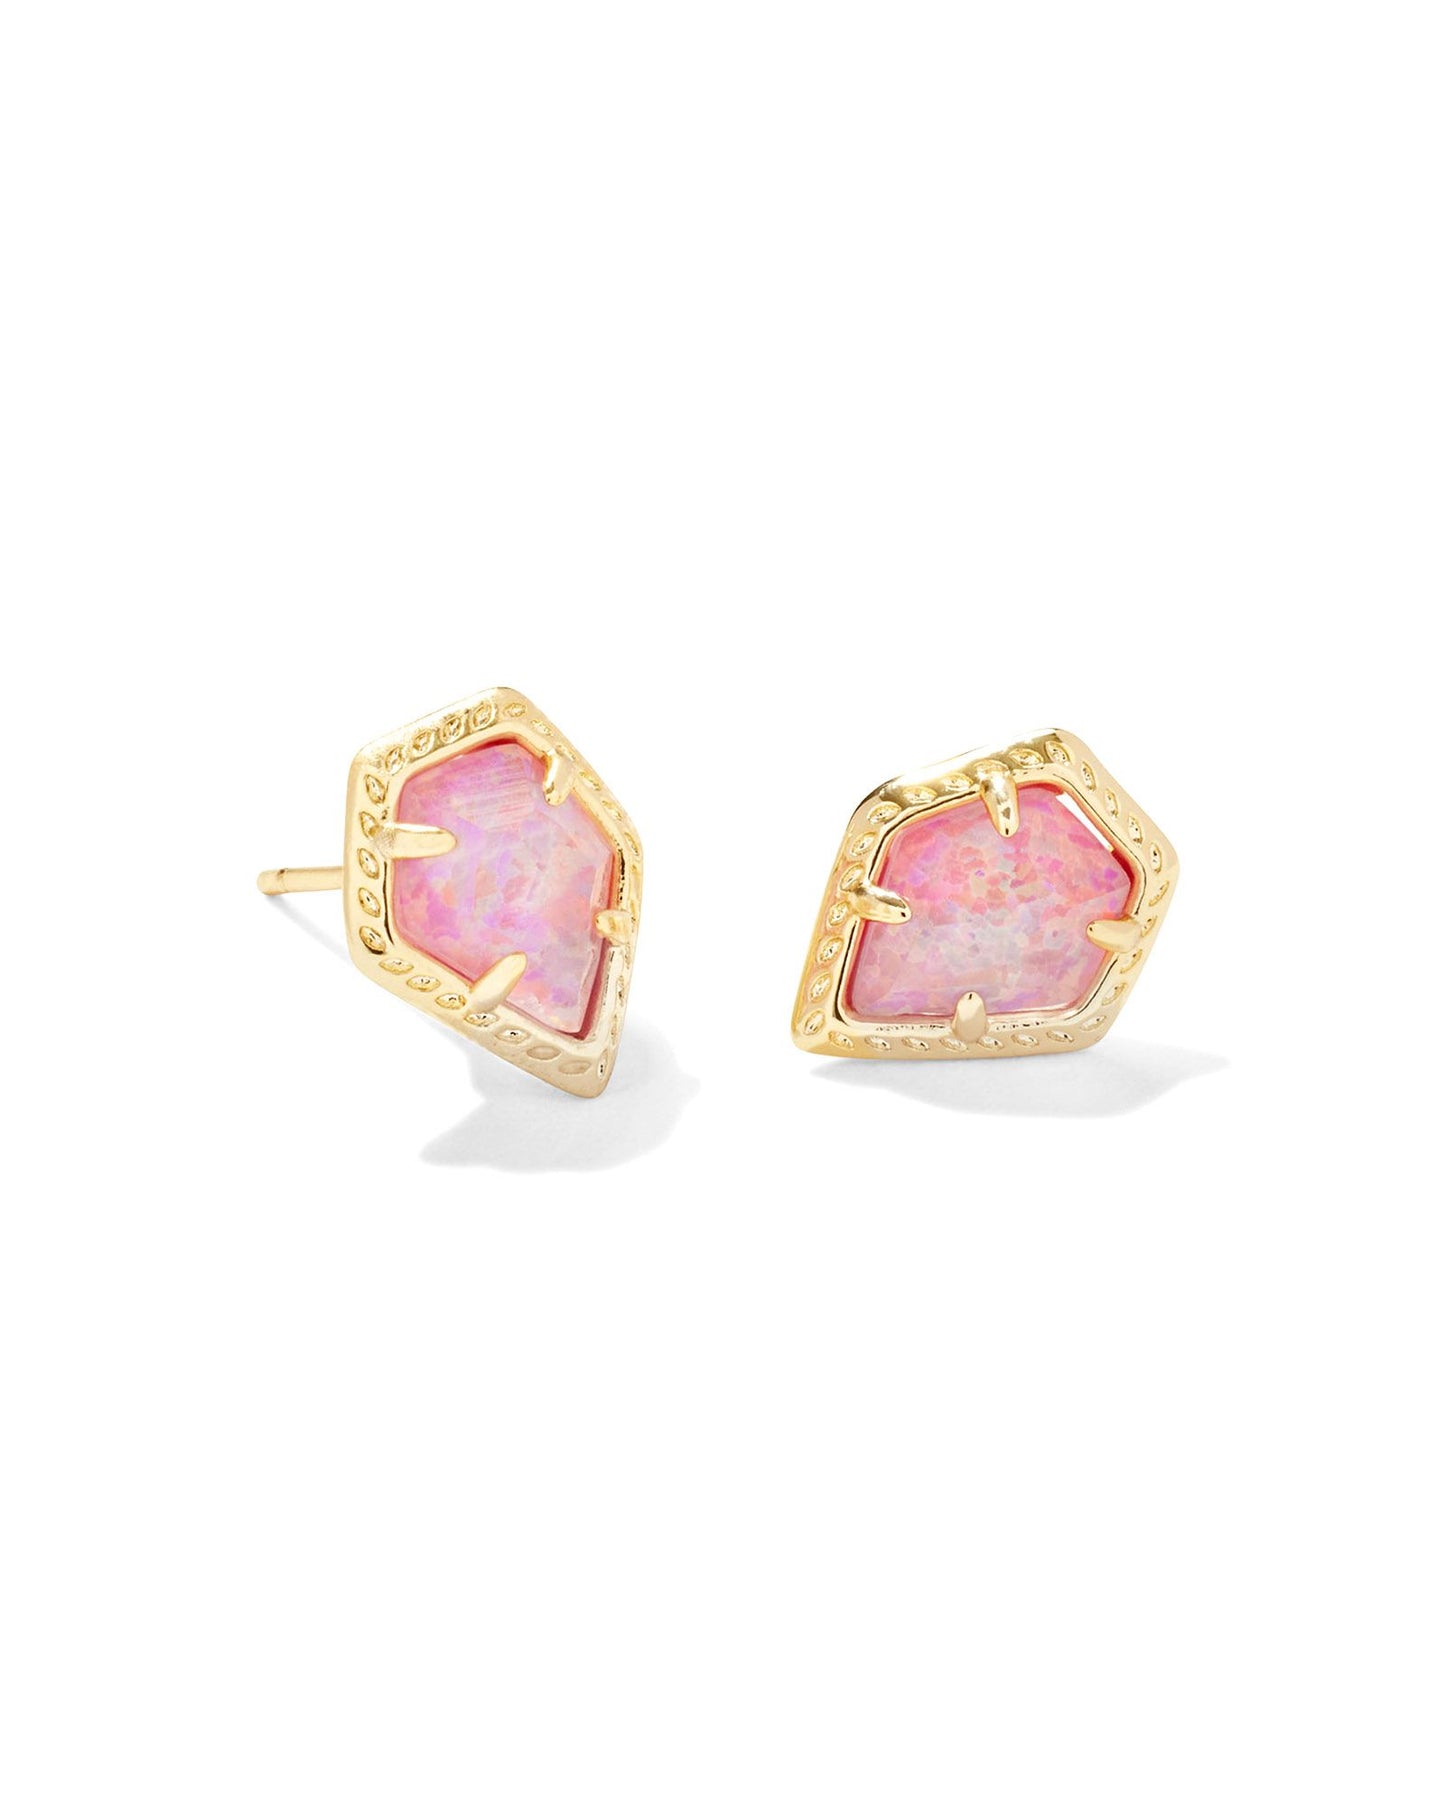 Framed Gold Tessa Stud Earrings in Luster Rose Pink Kyocera Opal